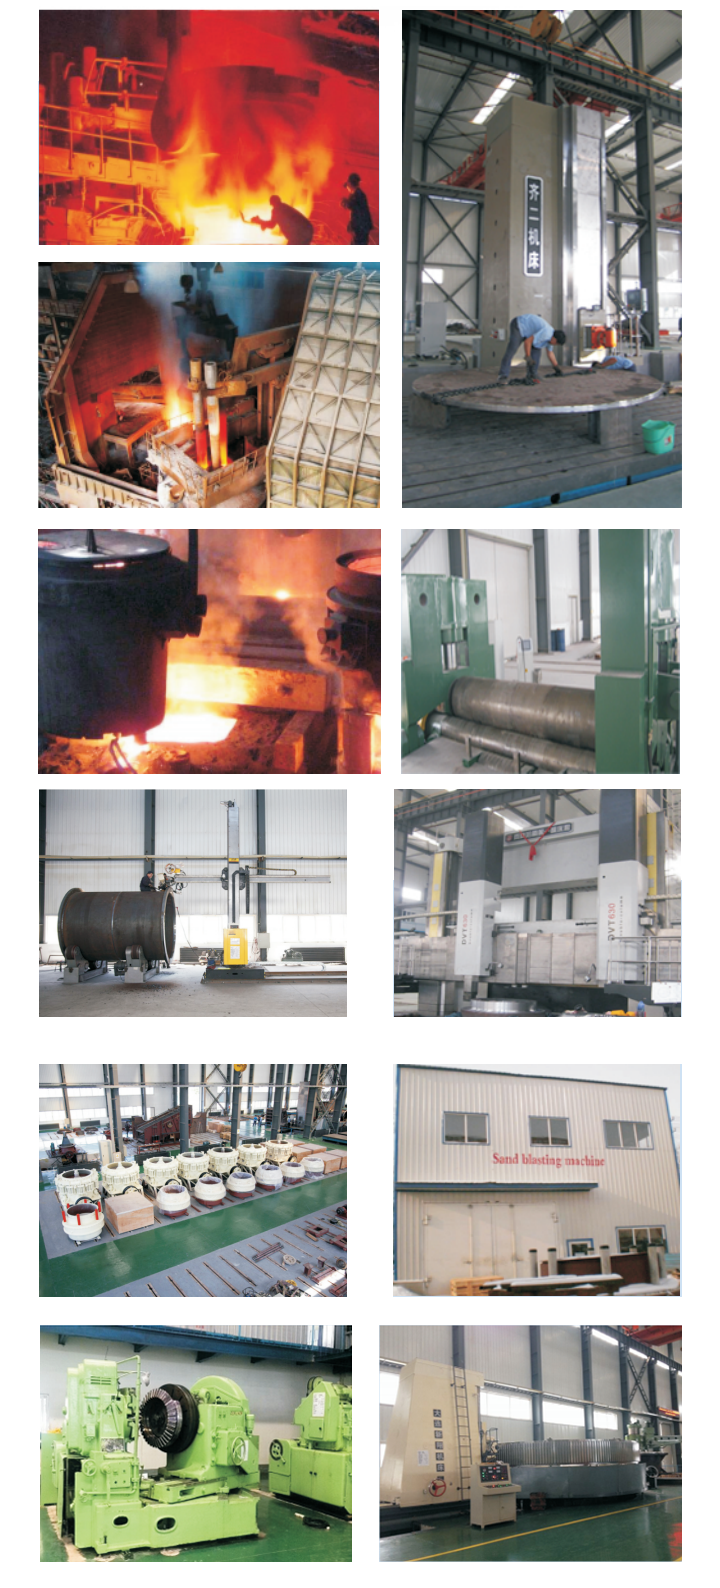 Shenyang Sanland Mining Equipment Manufacture Co., Ltd.